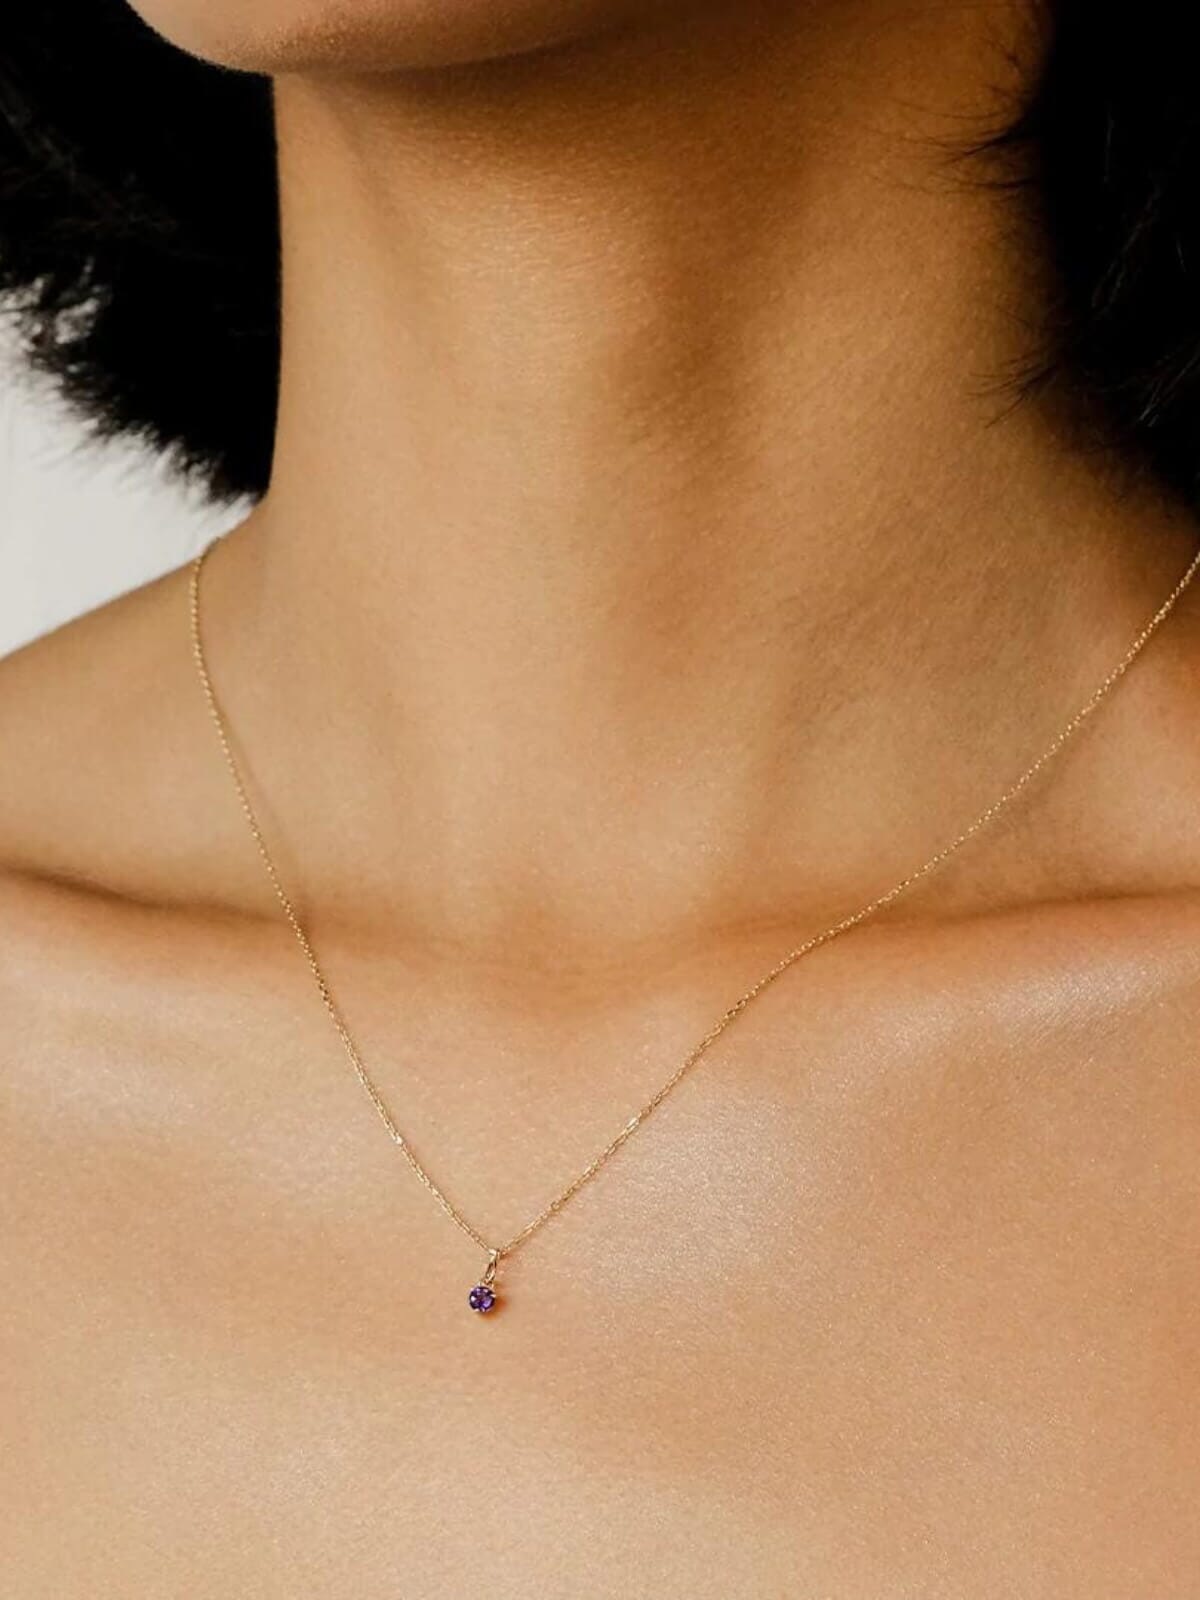 By Charlotte | 14k Gold Always In my Heart Birthstone Necklace Pendant - February - Amethyst | Perlu